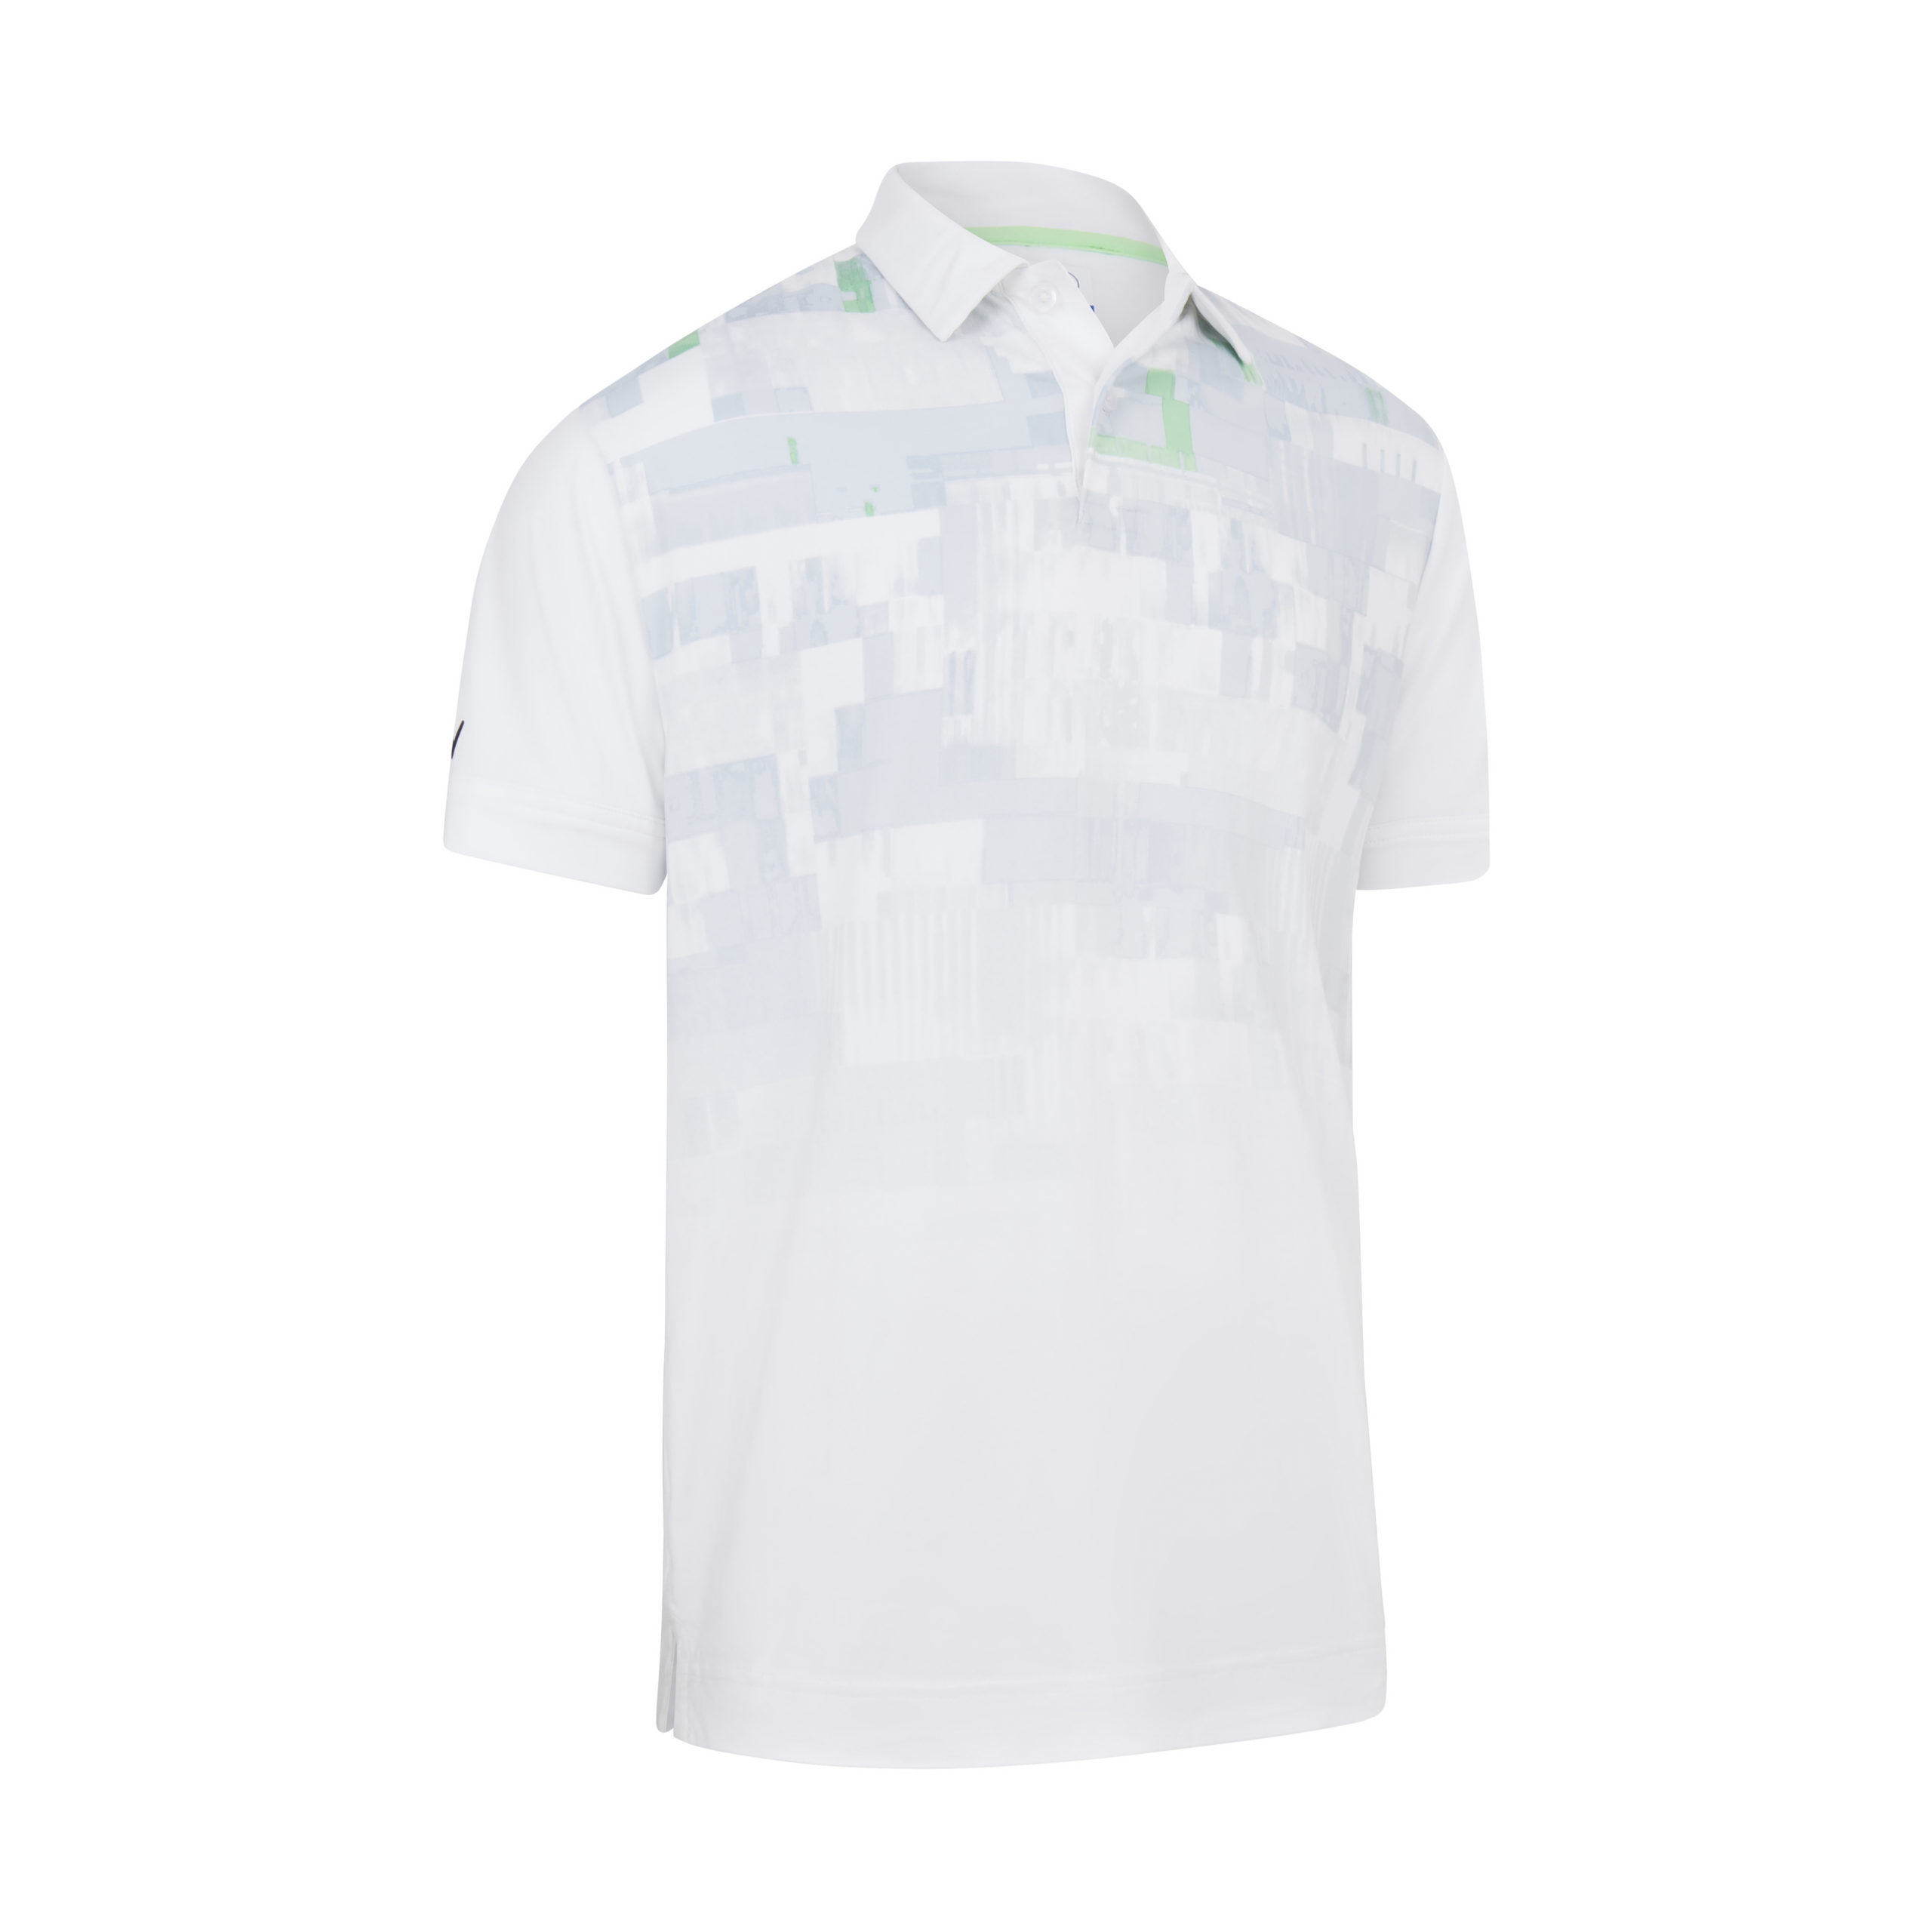 Callaway Multi-Color Glitched Print pánské golfové triko, bílé, vel. S DOPRODEJ